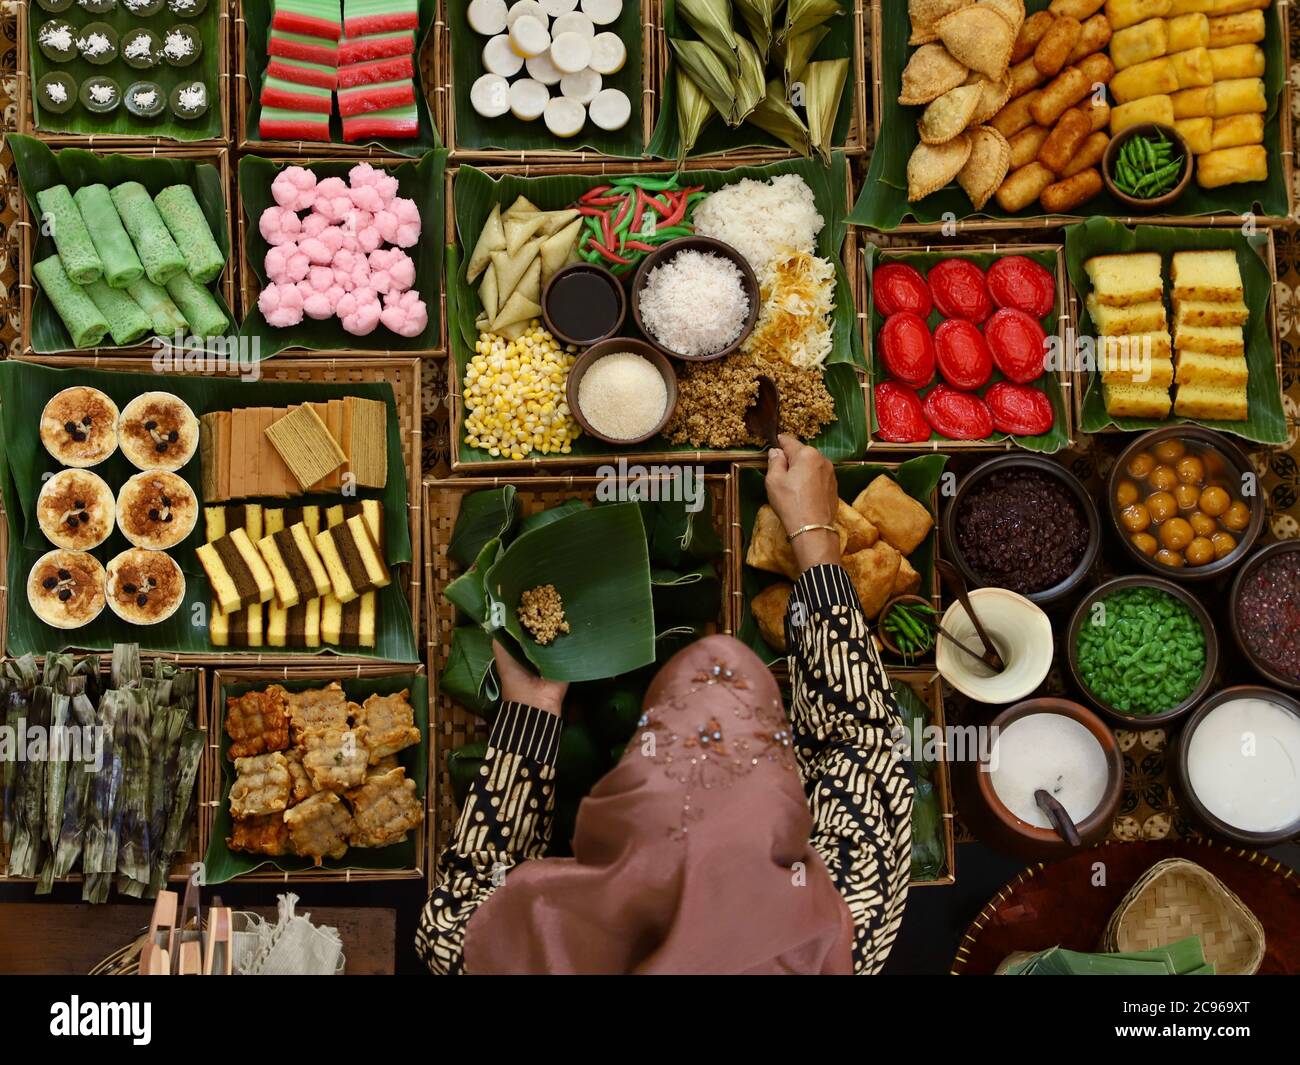 Kios Jajan Pasar, the Traditional Indonesian Sweet and Savoury Snack Stall Stock Photo